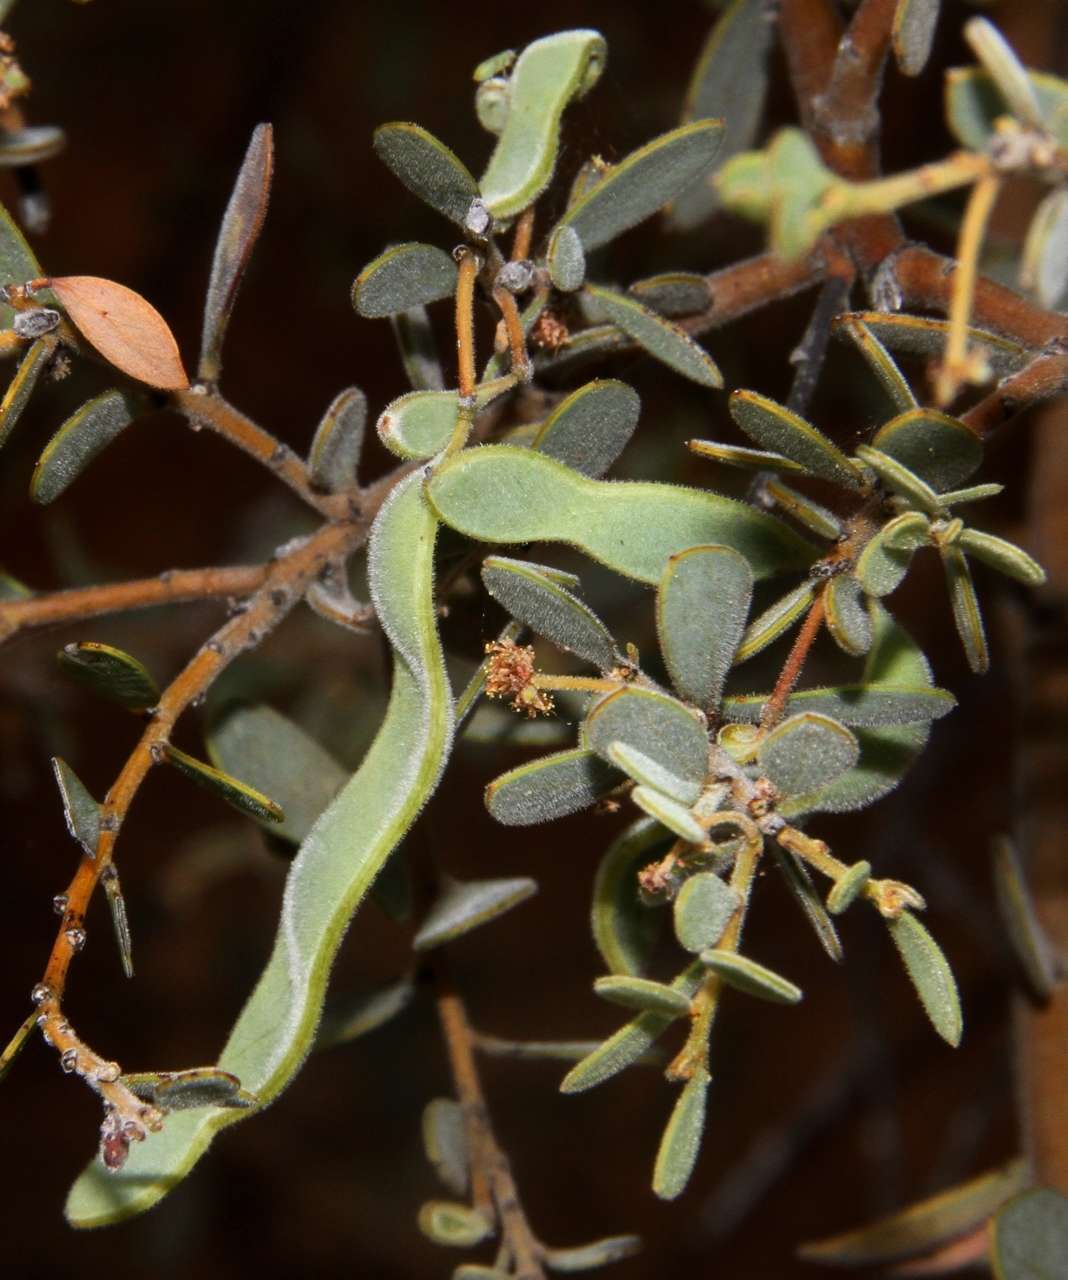 Image of gray mulga